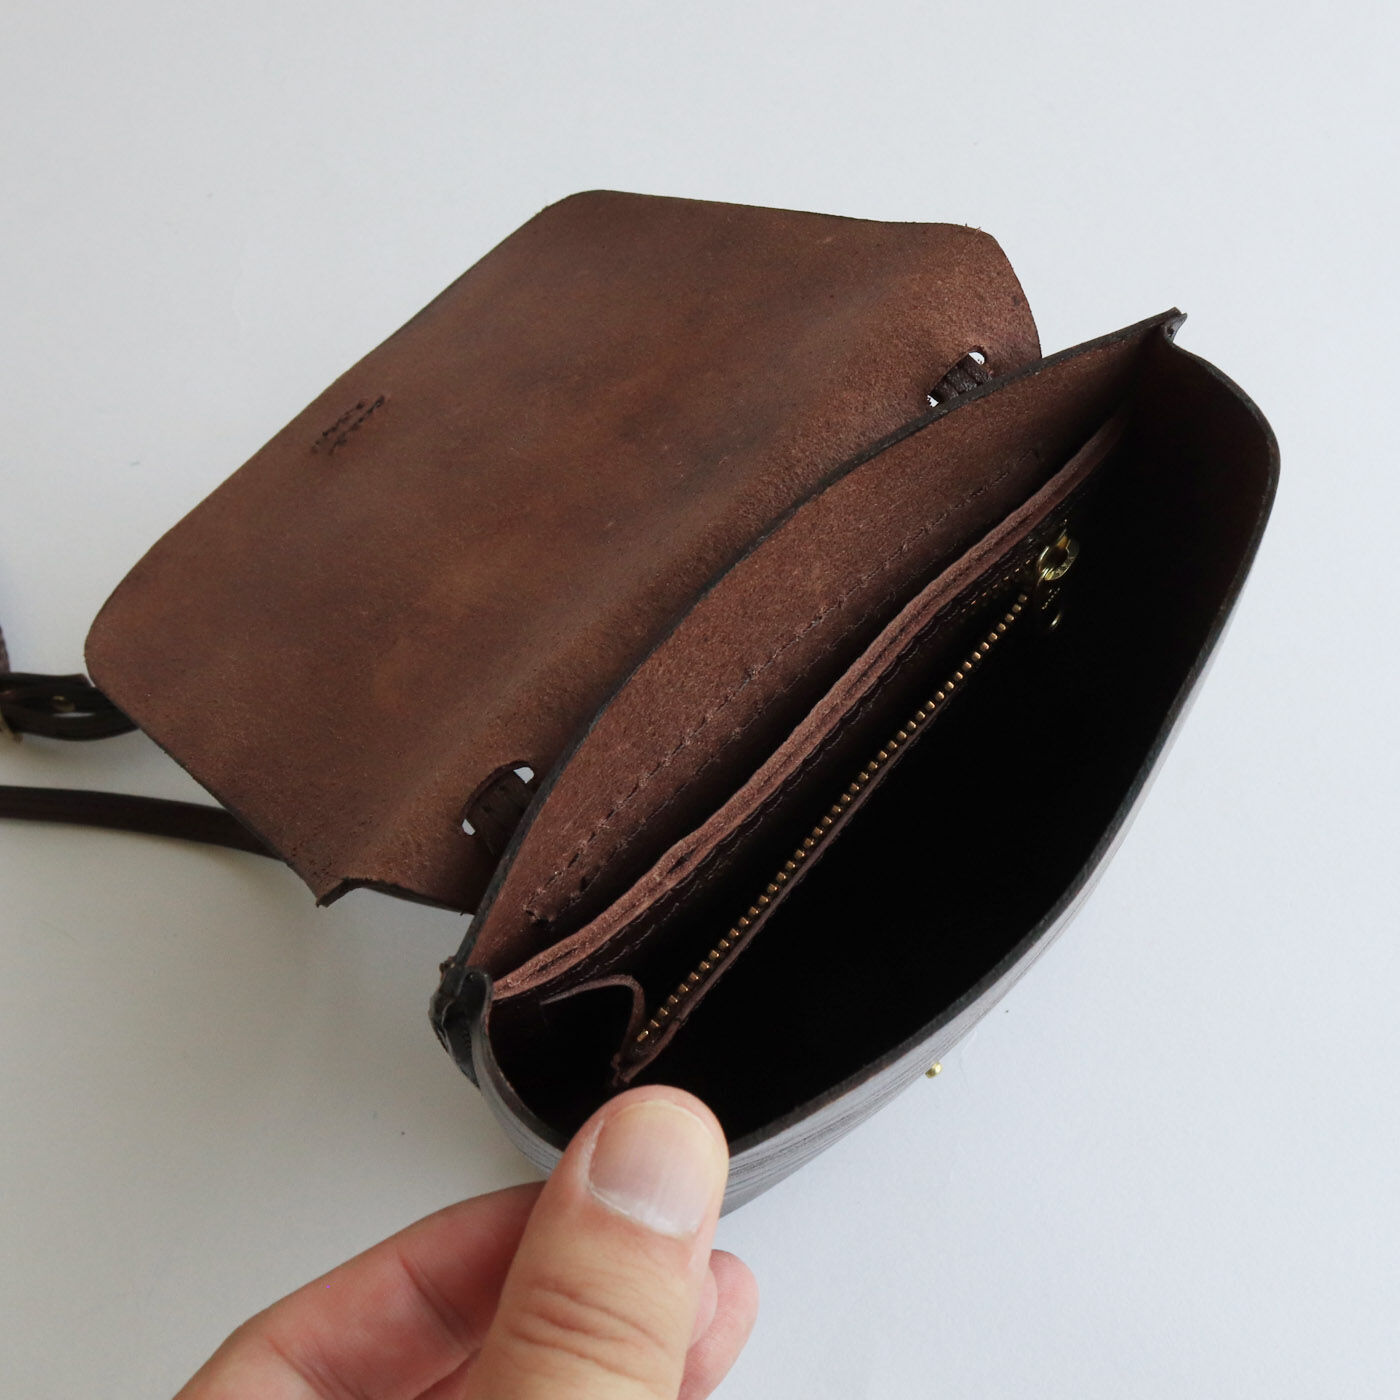 ＆Stories|福岡の鞄作家と作った 職人本革のアーネストバッグ〈ウッドブラウン〉|中面は鍵などの収納に便利なファスナーポケット付き。